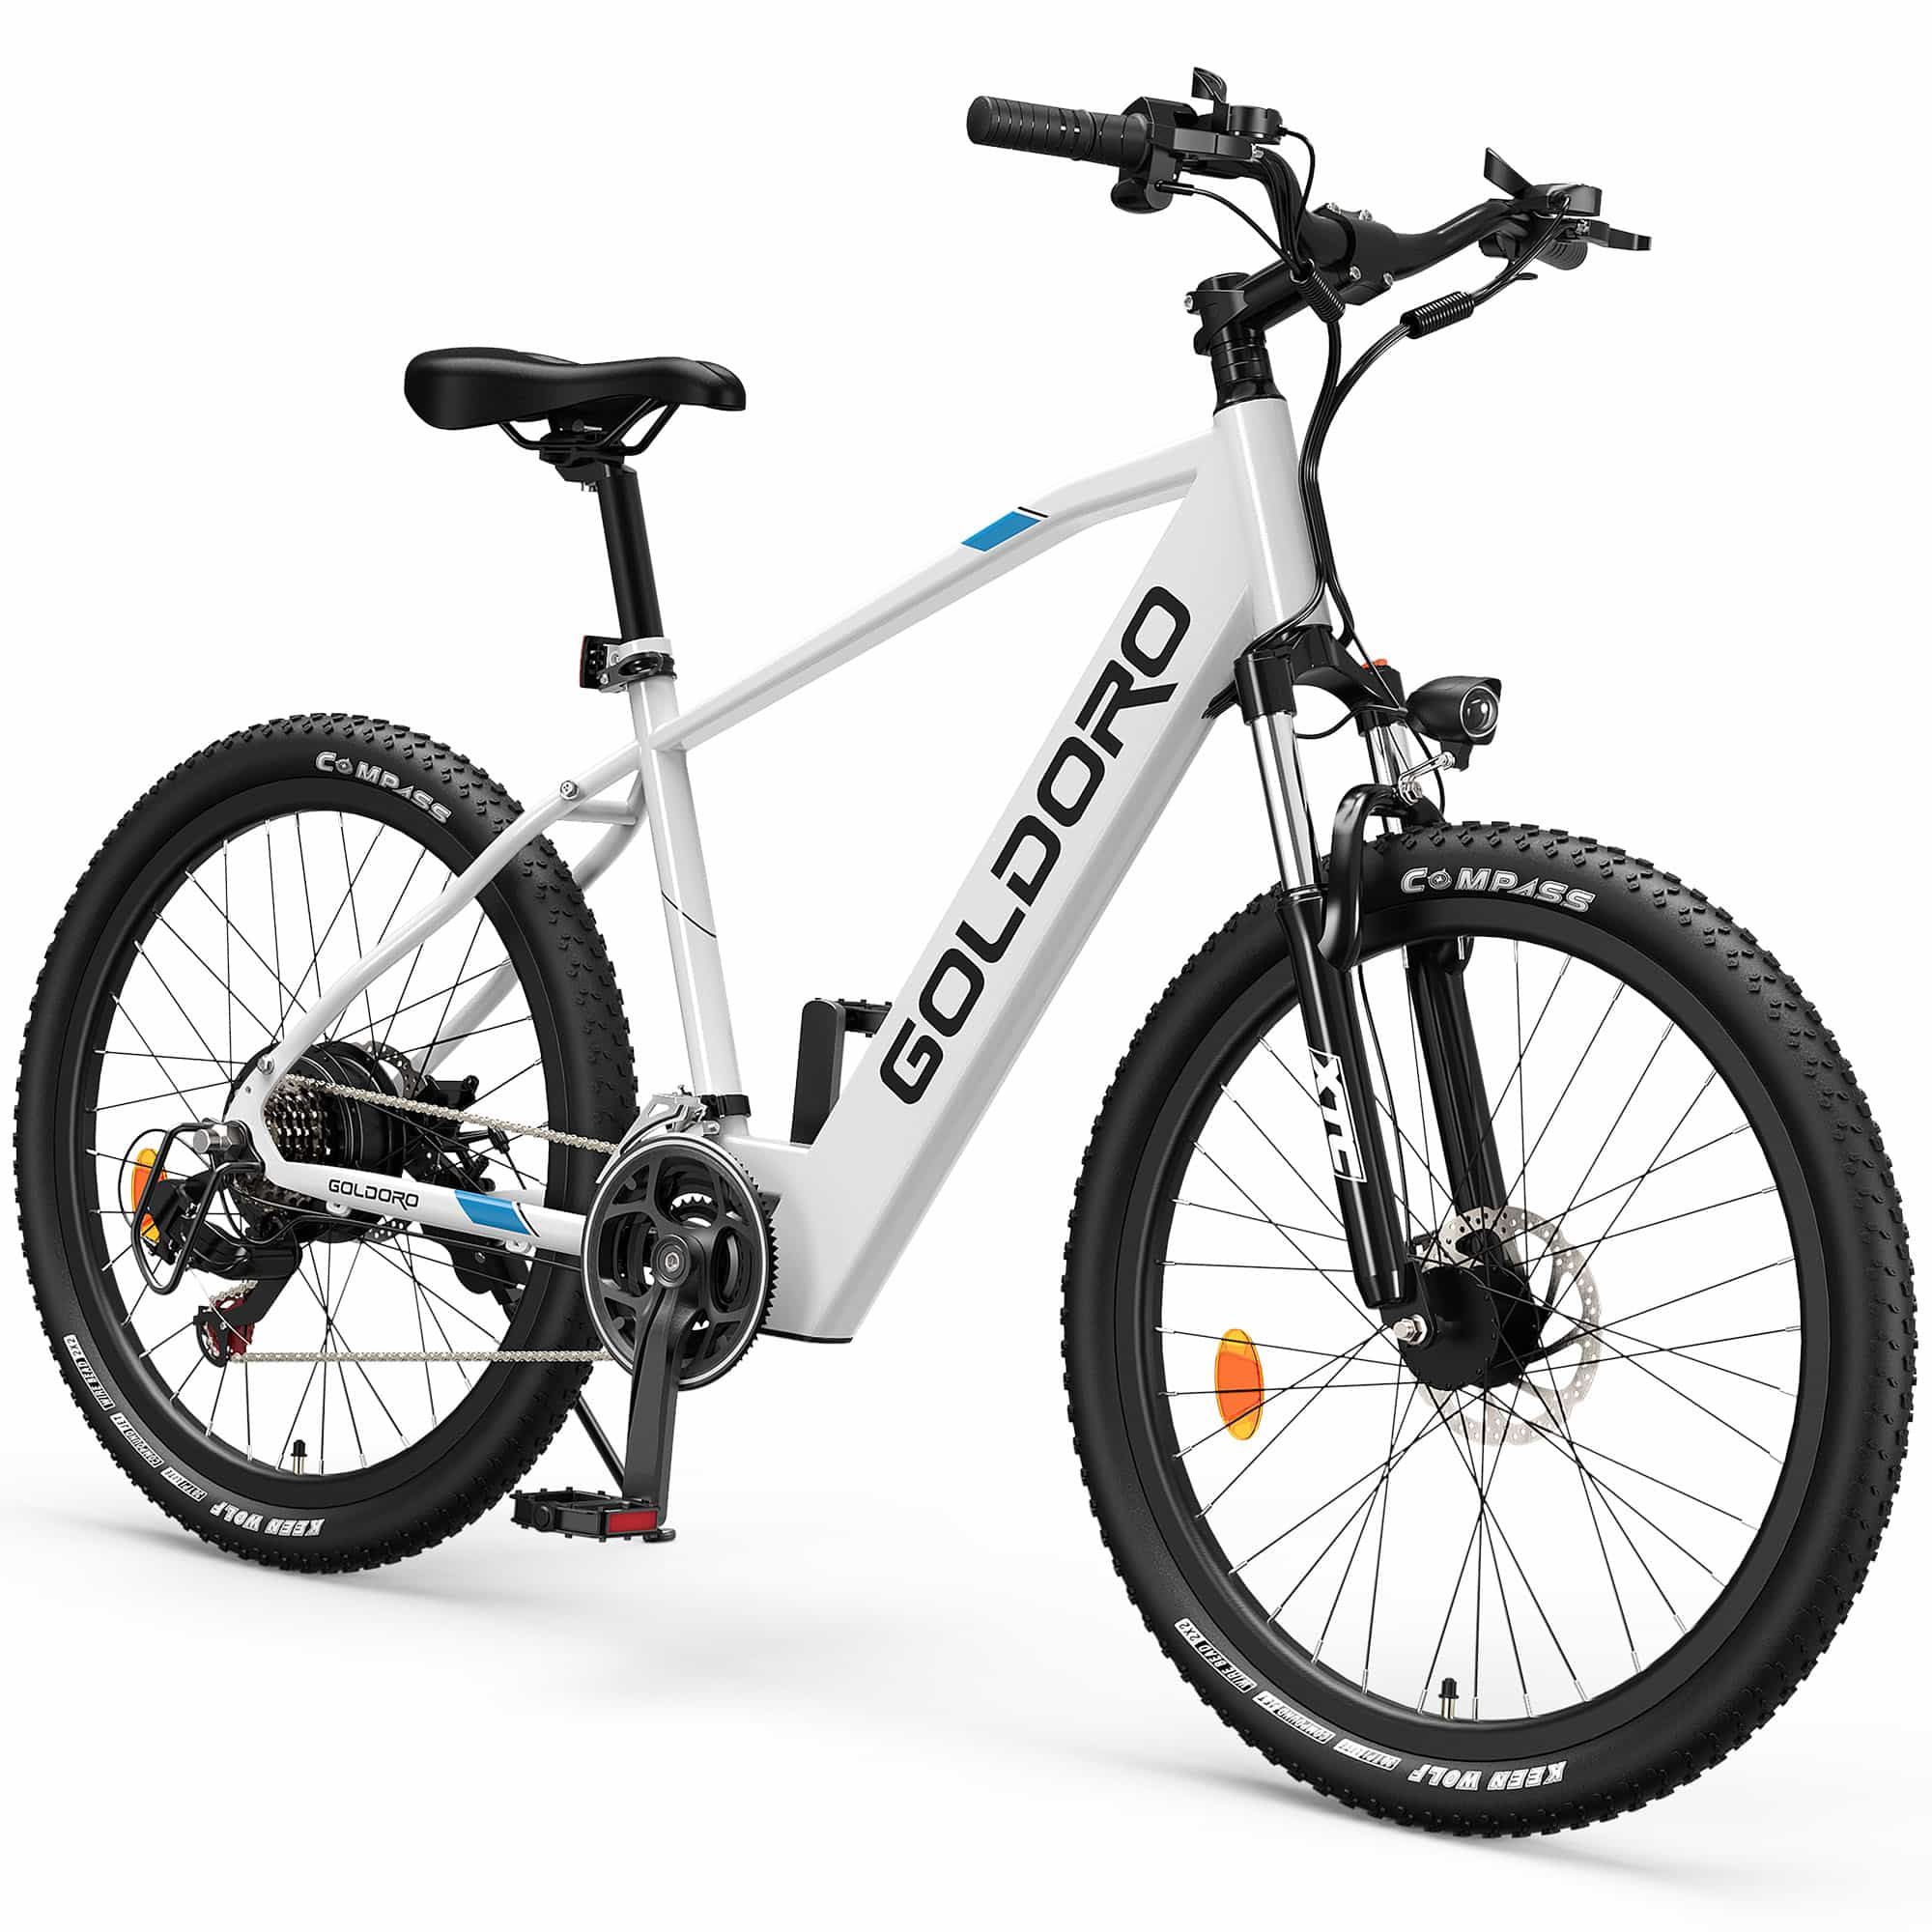 Goldoro Electric Bike 26″ X7 Aluminum Alloy Mountain Bike, 250W/36V, MAX 18 MPH, 21 speed with Alloy Wheels (White)